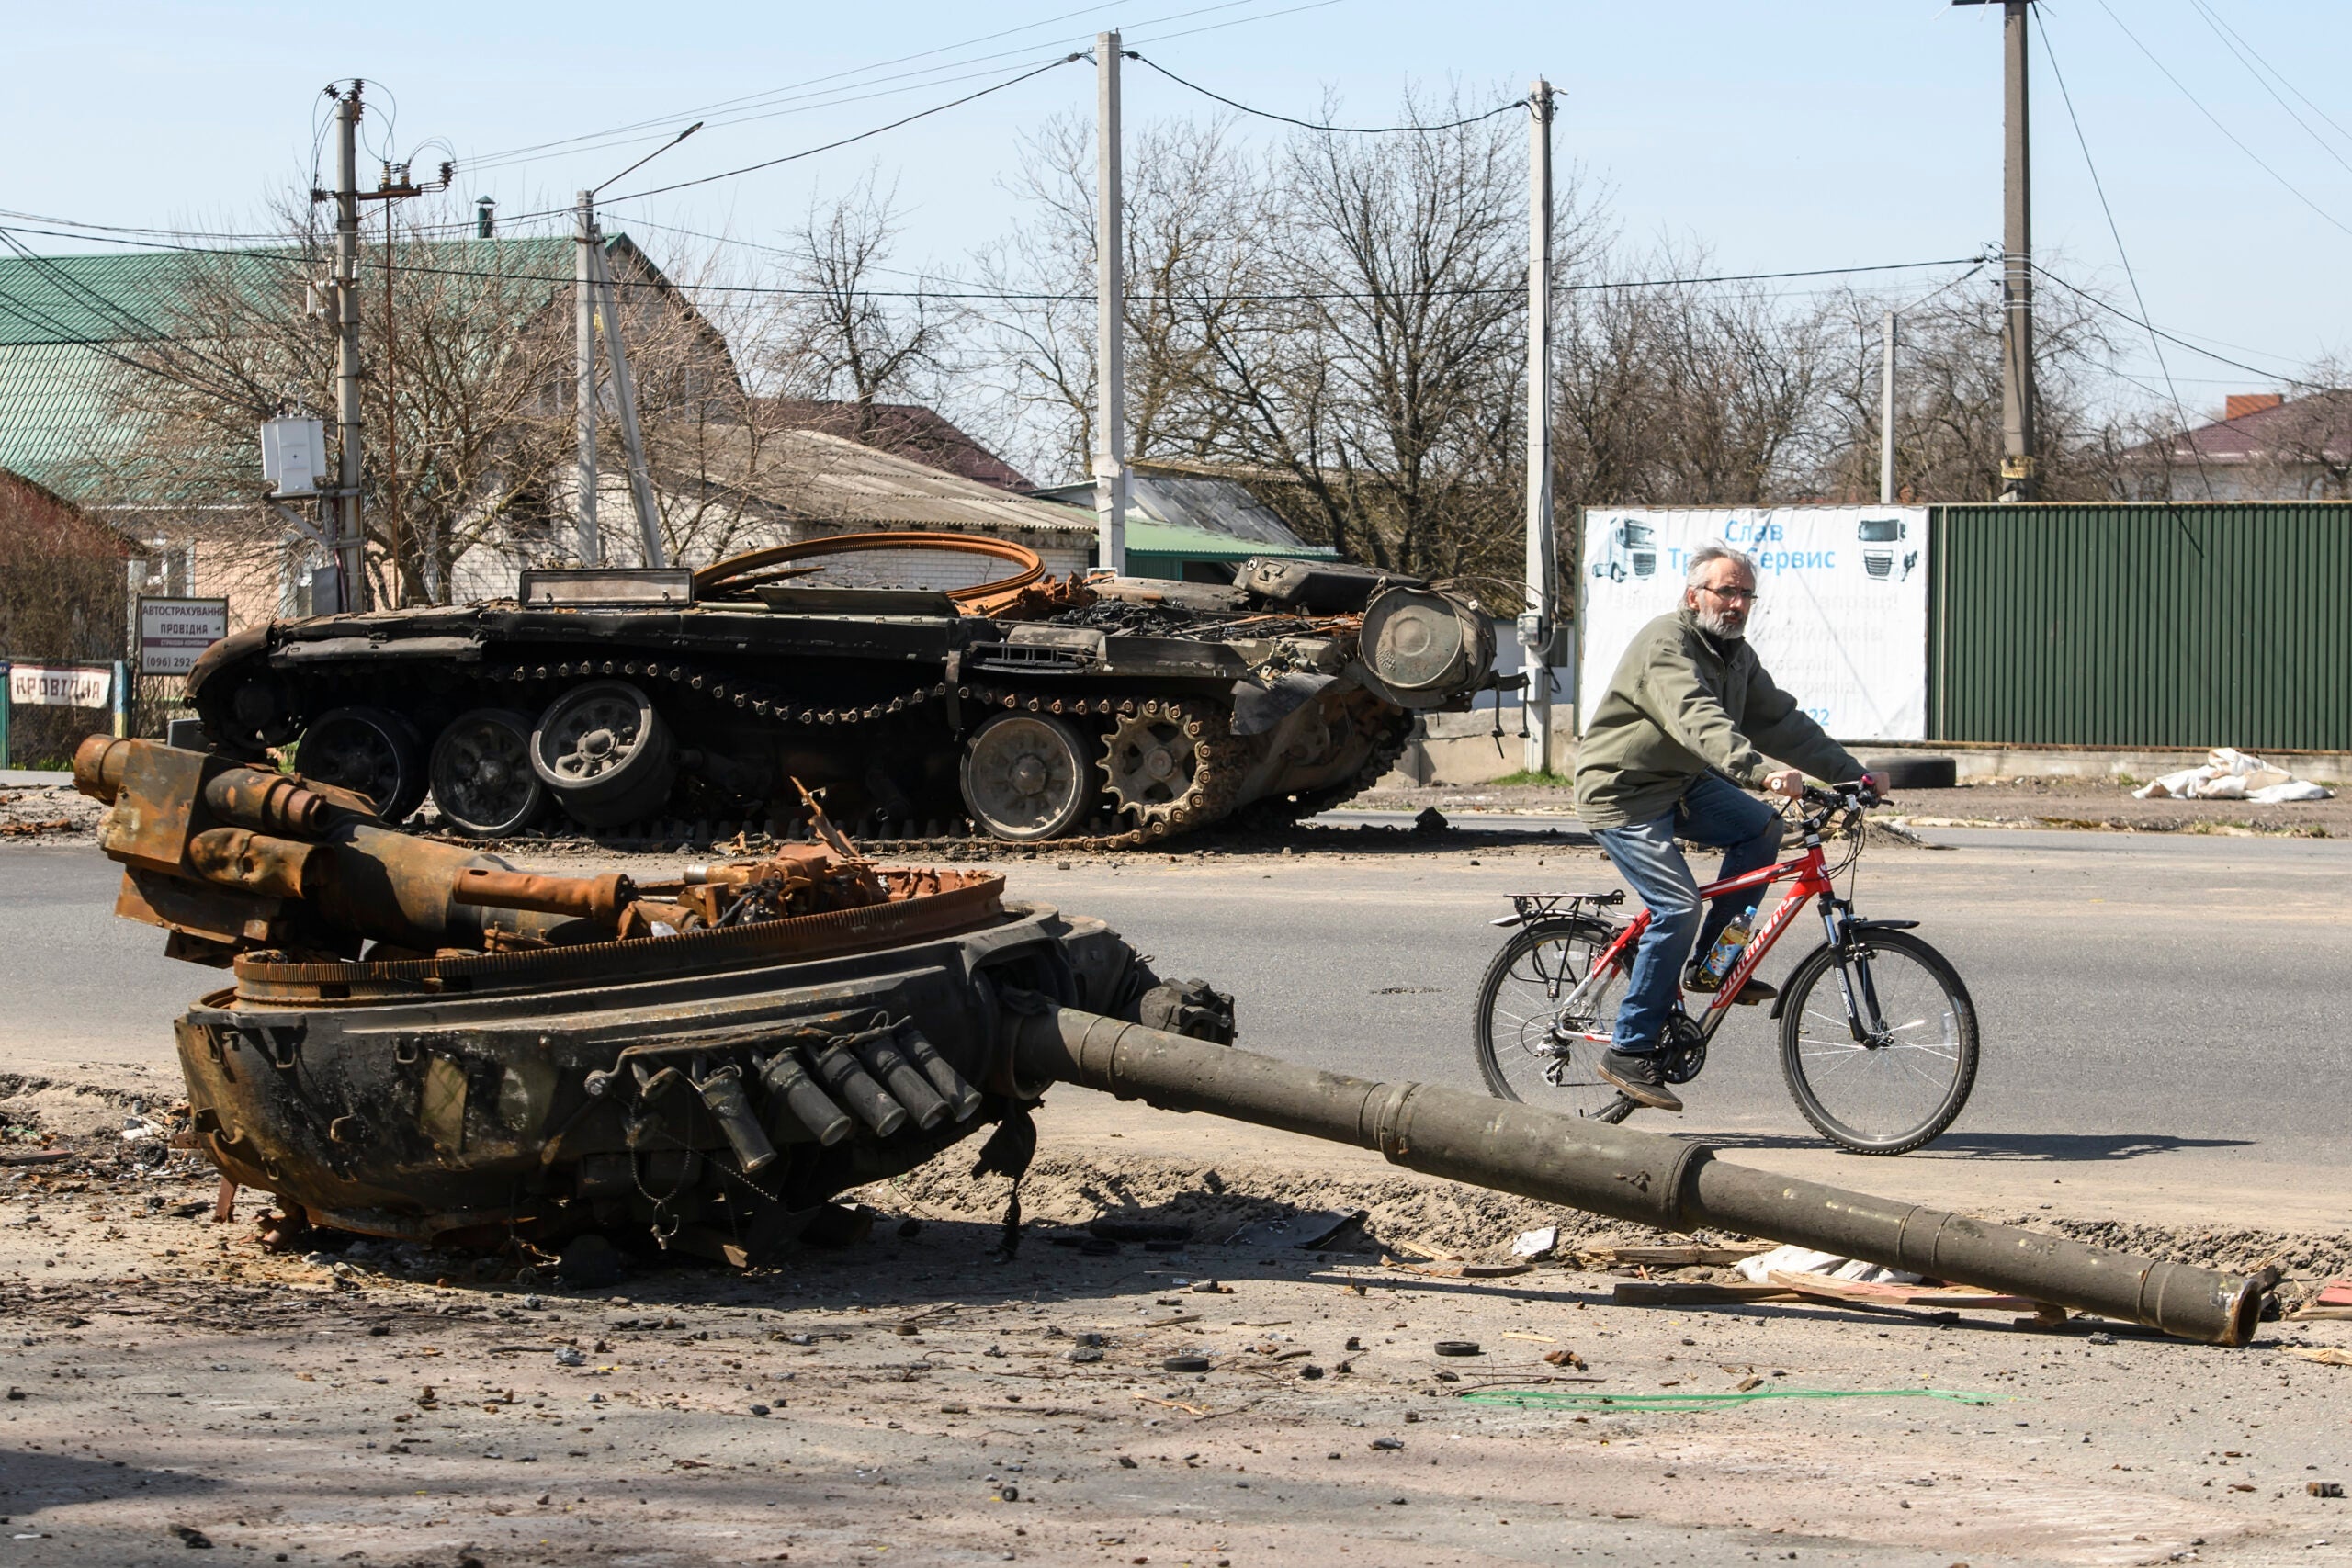 The US is sending tanks to Ukraine, just not American ones